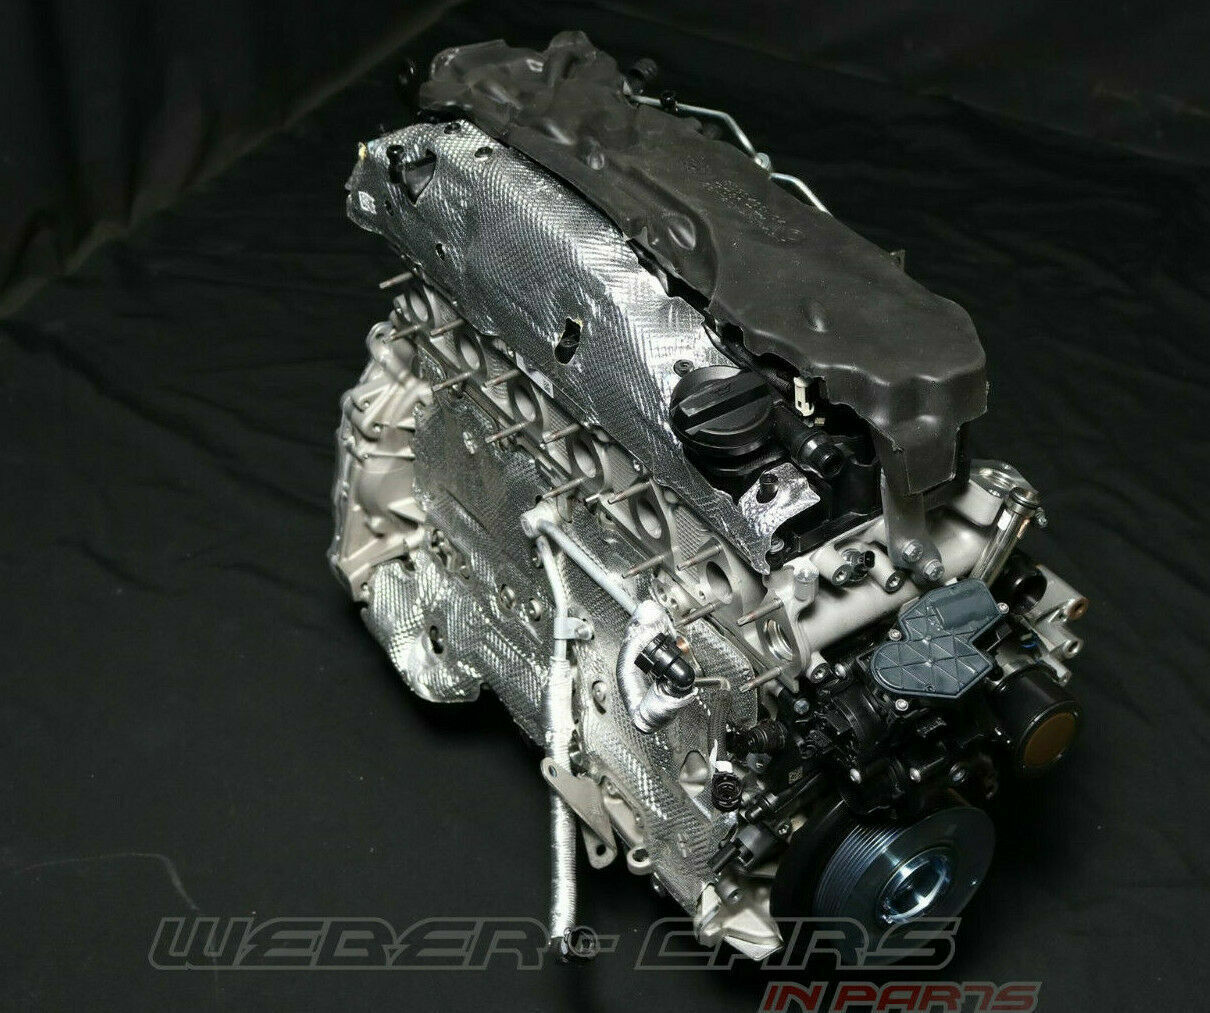 5A09AF4 B57 D30B Motor Engine Pump OEM BMW X3 40dX Mild Hybrid 340PS 2km N.2